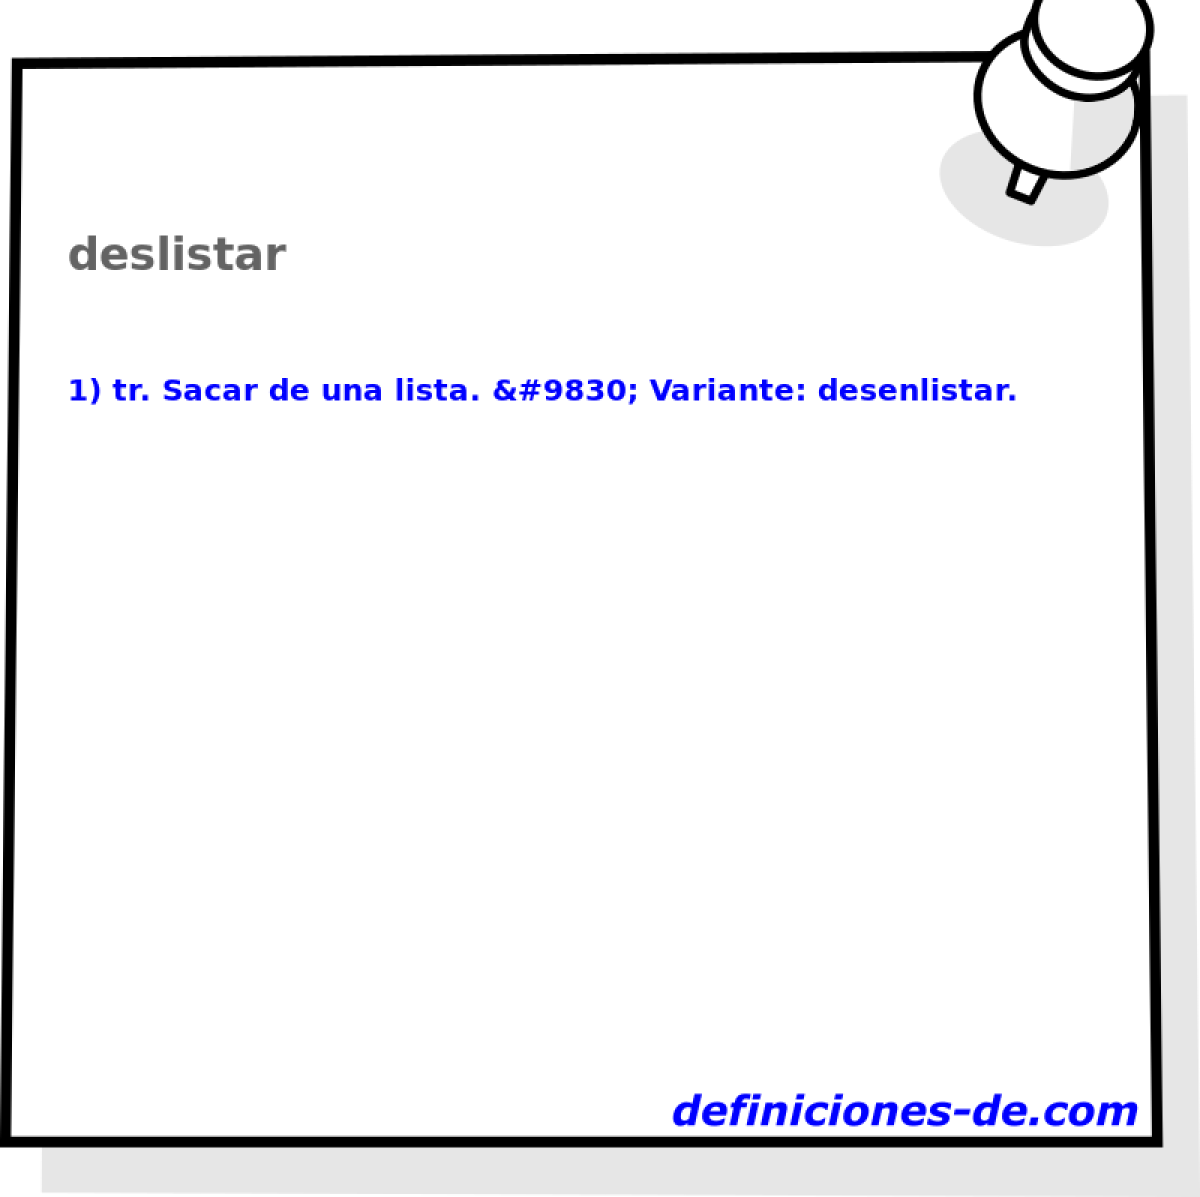 deslistar 